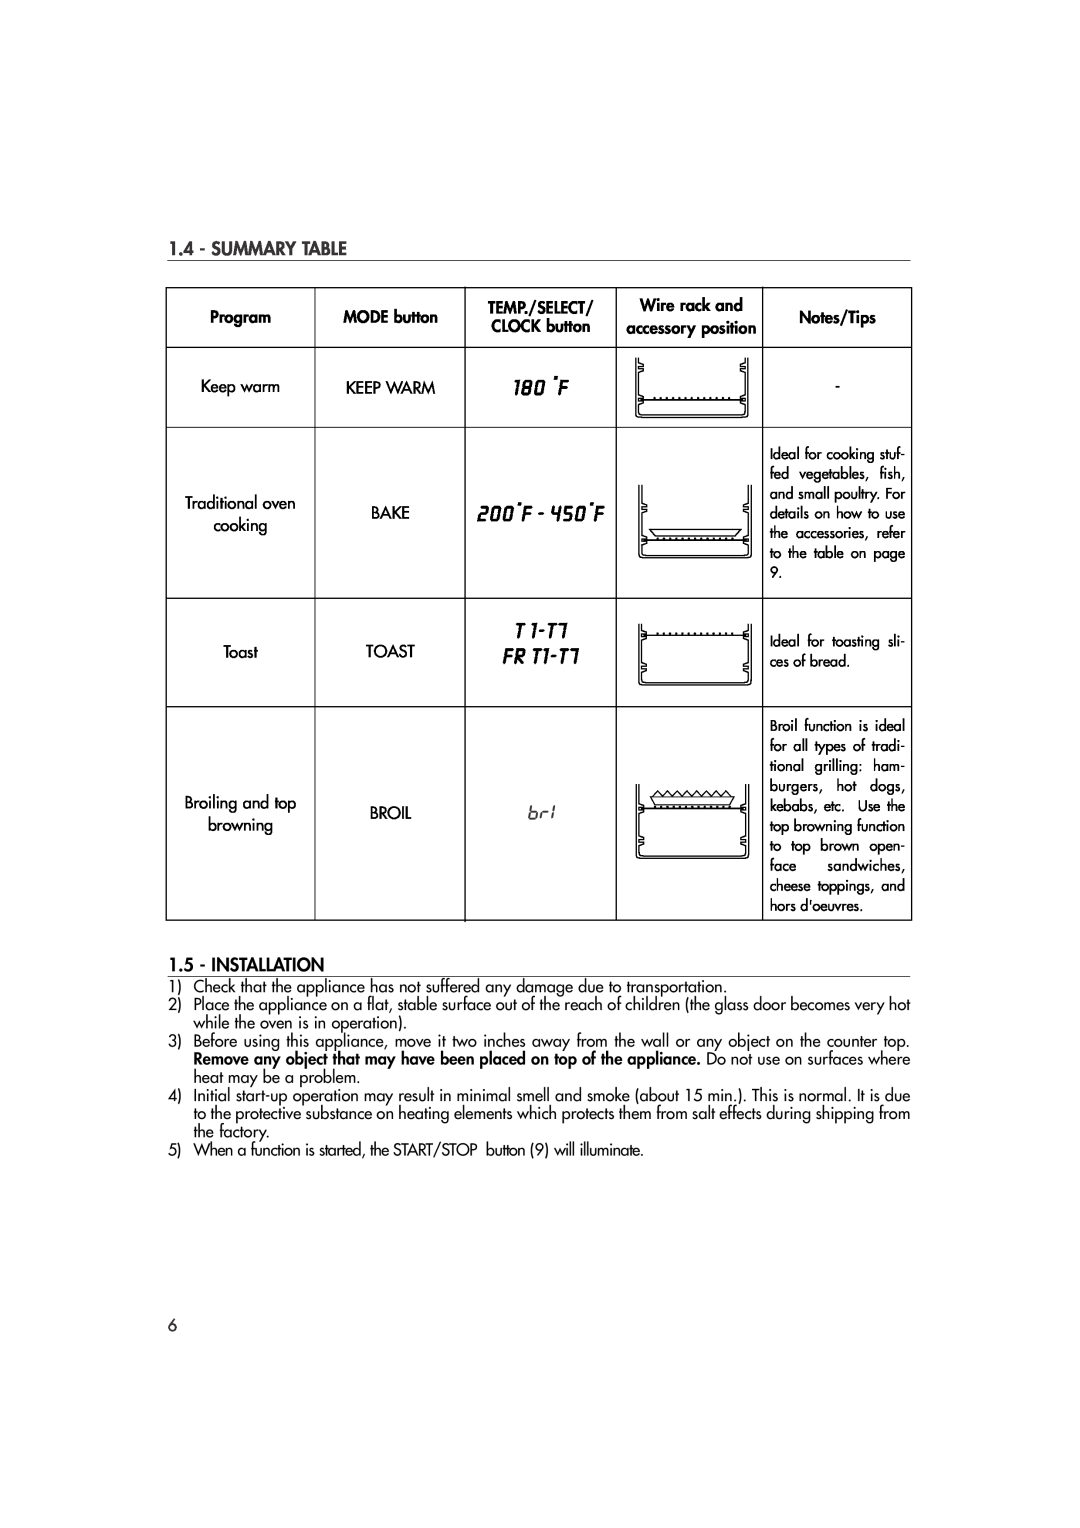 DeLonghi DO400 manual Summary Table, Installation, 200F - 450F, t 1-t7, 180 F, FR T1-T7 